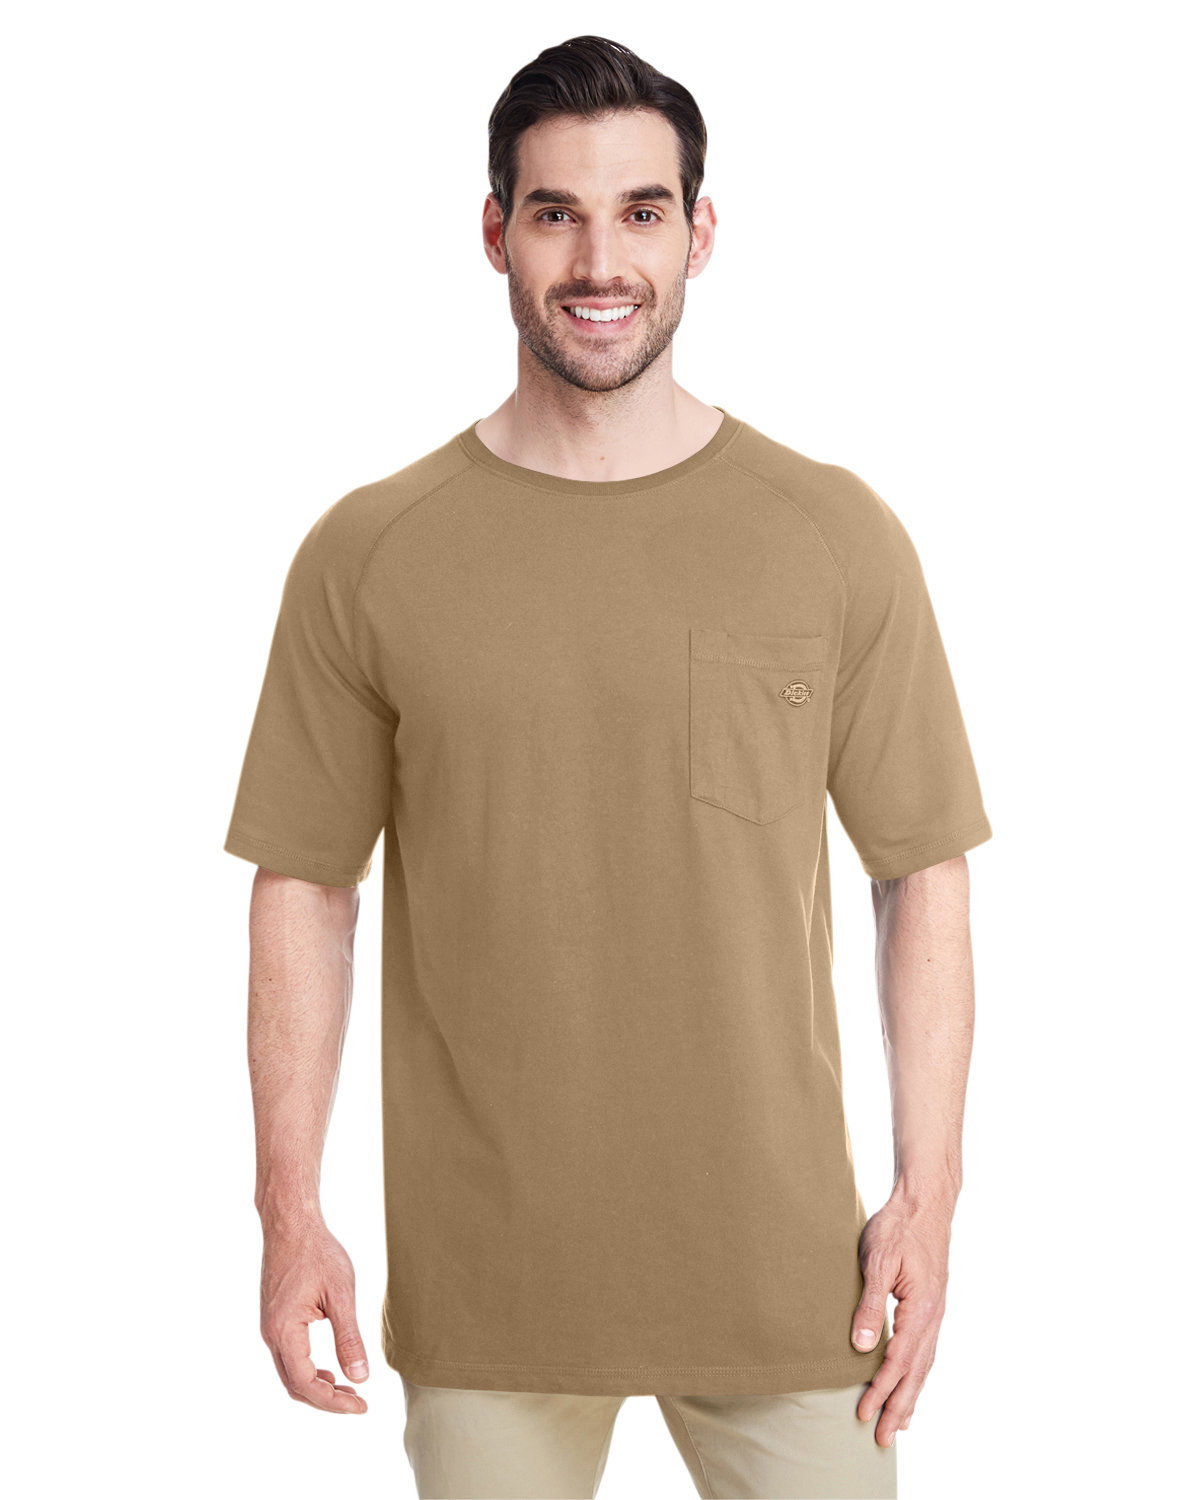 Dickies Men's 5.5 oz. Temp-IQ Performance T-Shirt DESERT SAND 